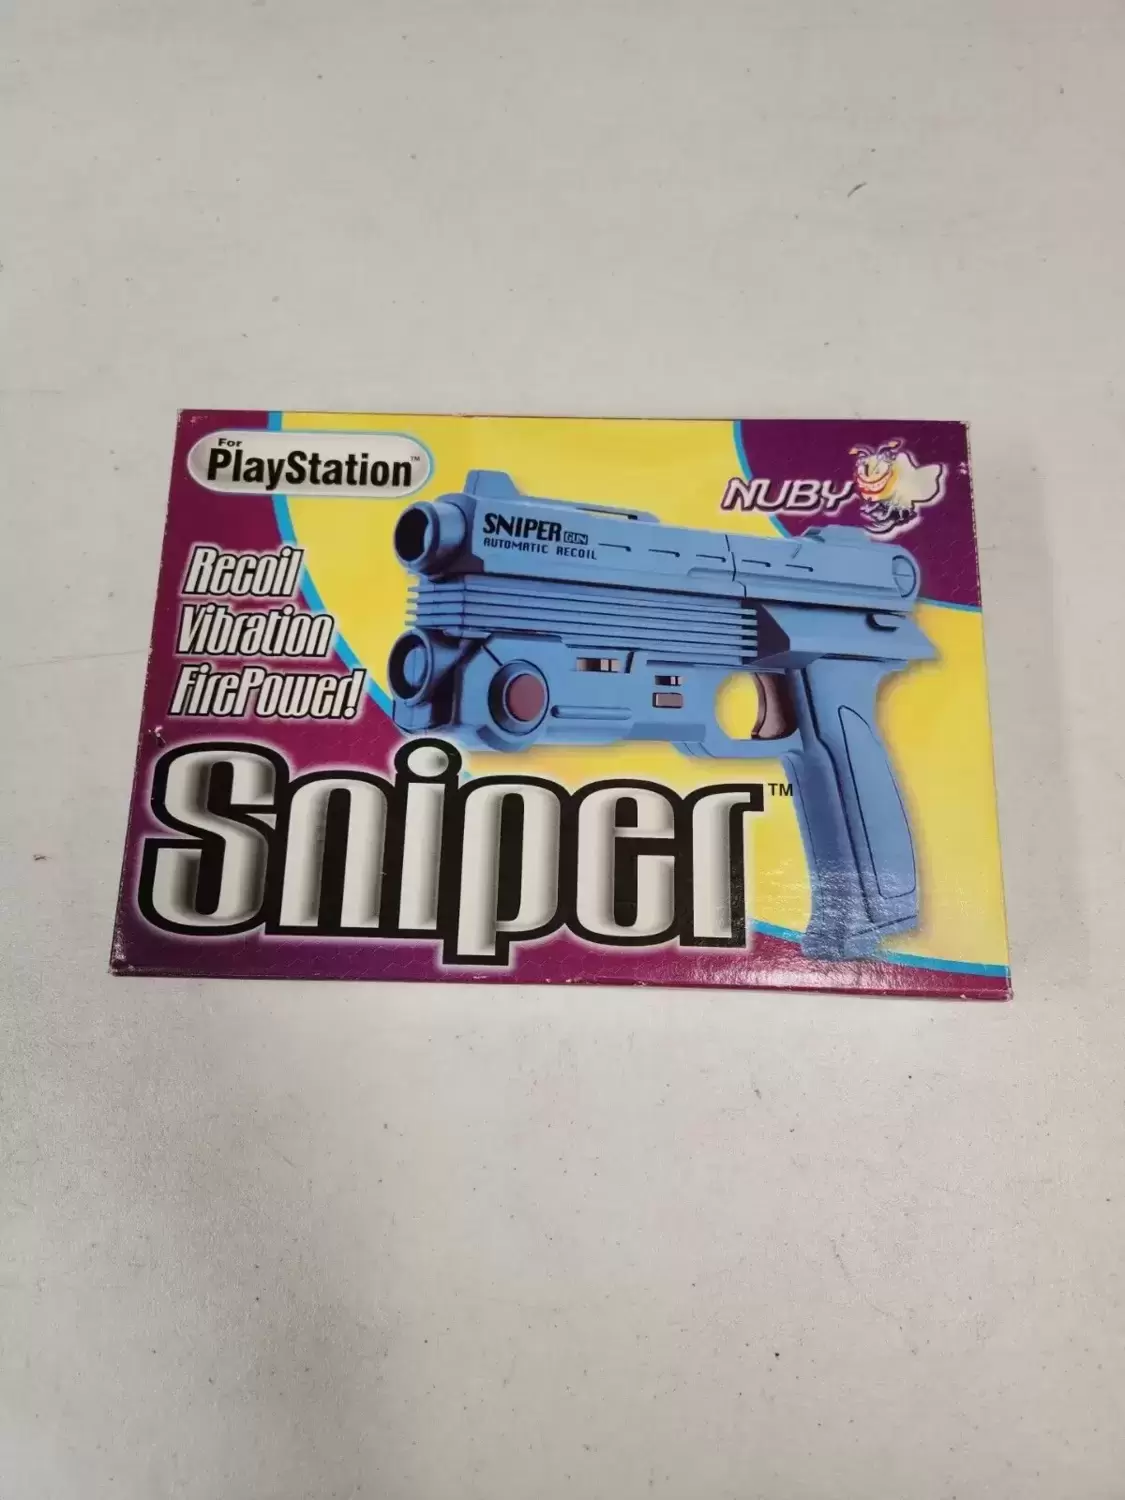 Matériel PlayStation - NUBY Sniper Recoil Vibration